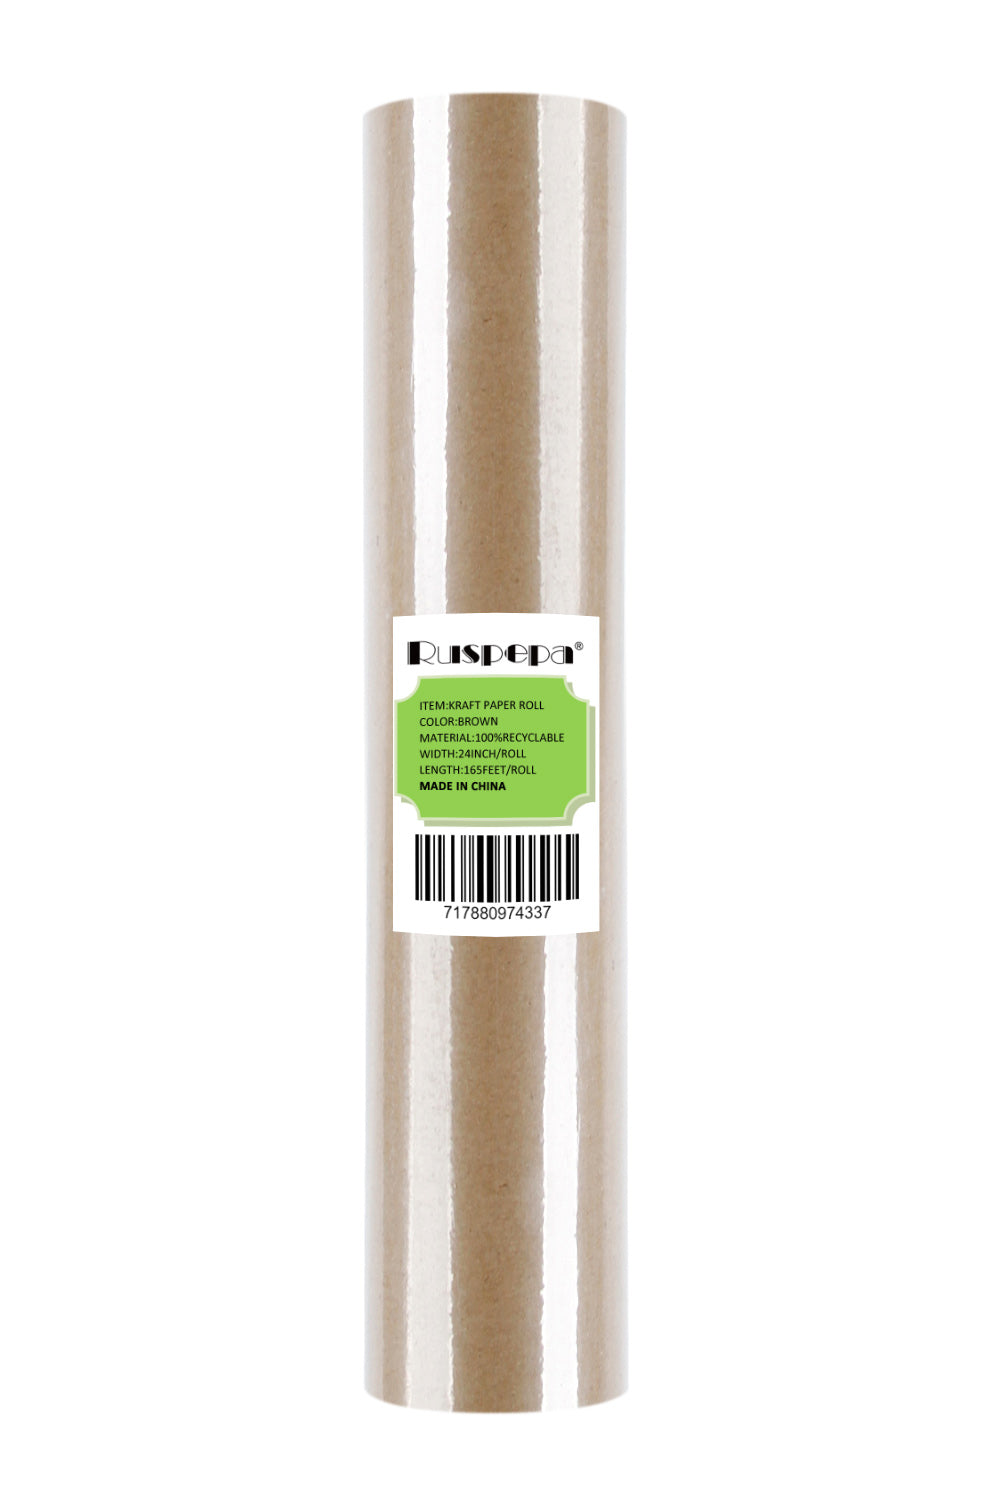 Uoffice Kraft Paper Roll 600'x24 50lb Strength Brown Shipping Paper